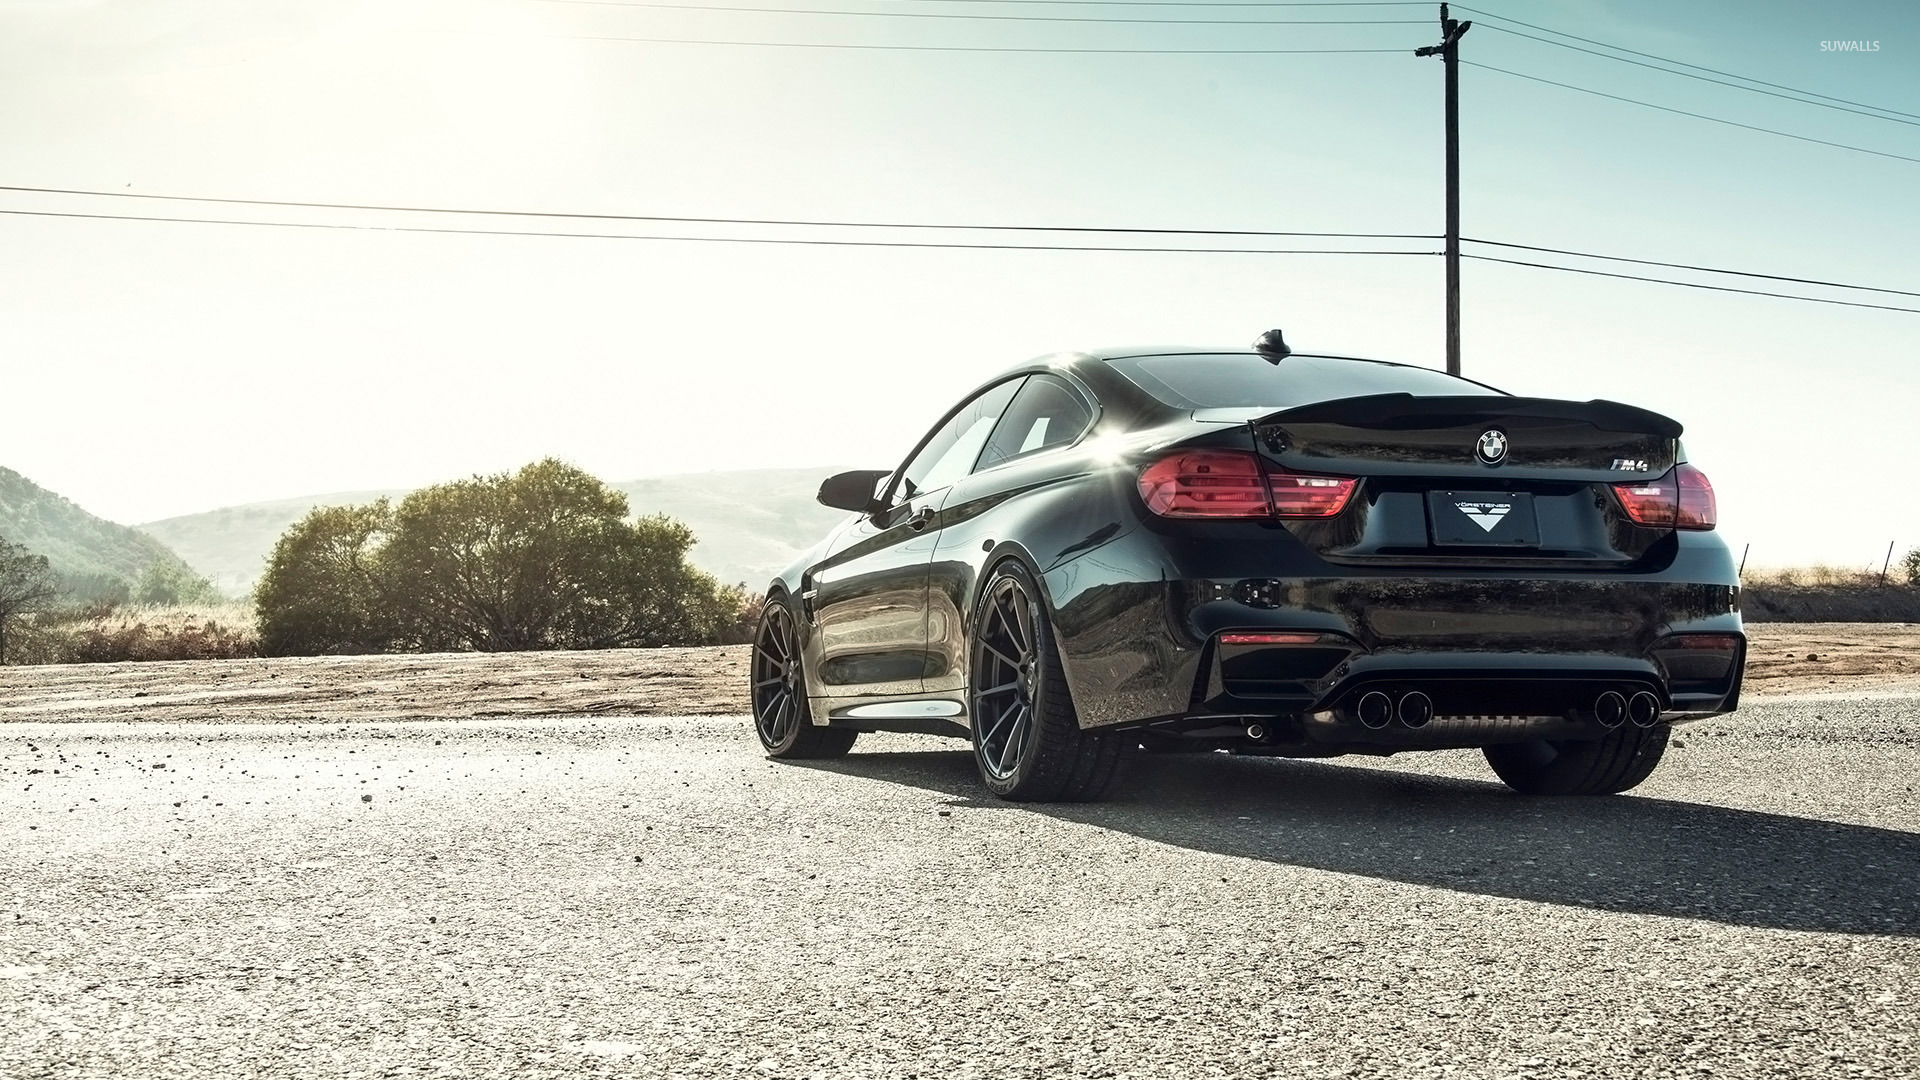 2015 Vorsteiner BMW M4 back view wallpaper - Car wallpapers - #50529